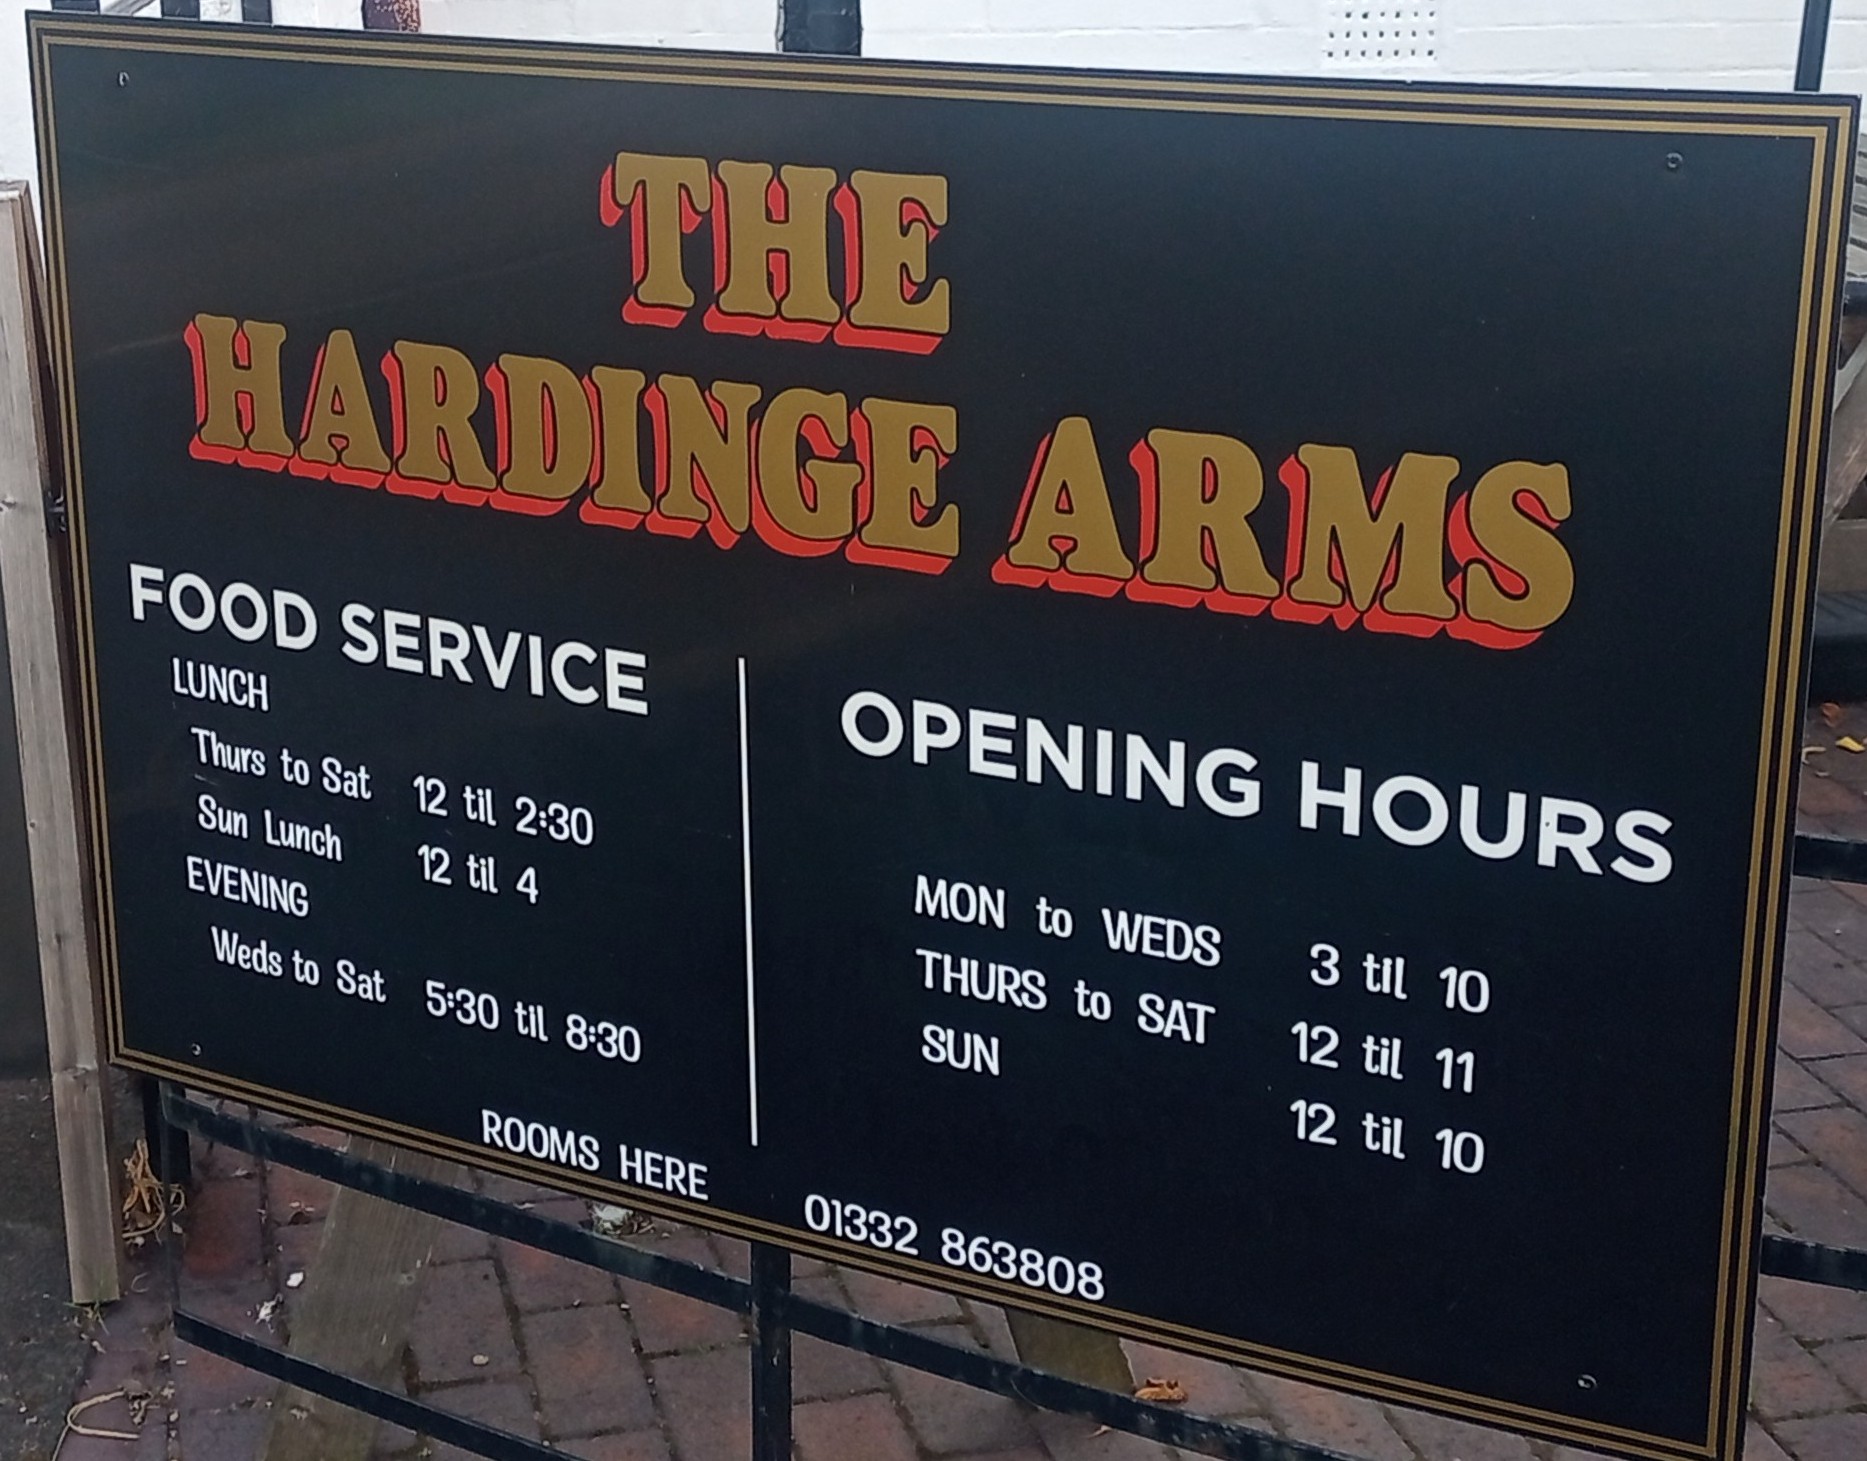 The Hardinge Arms